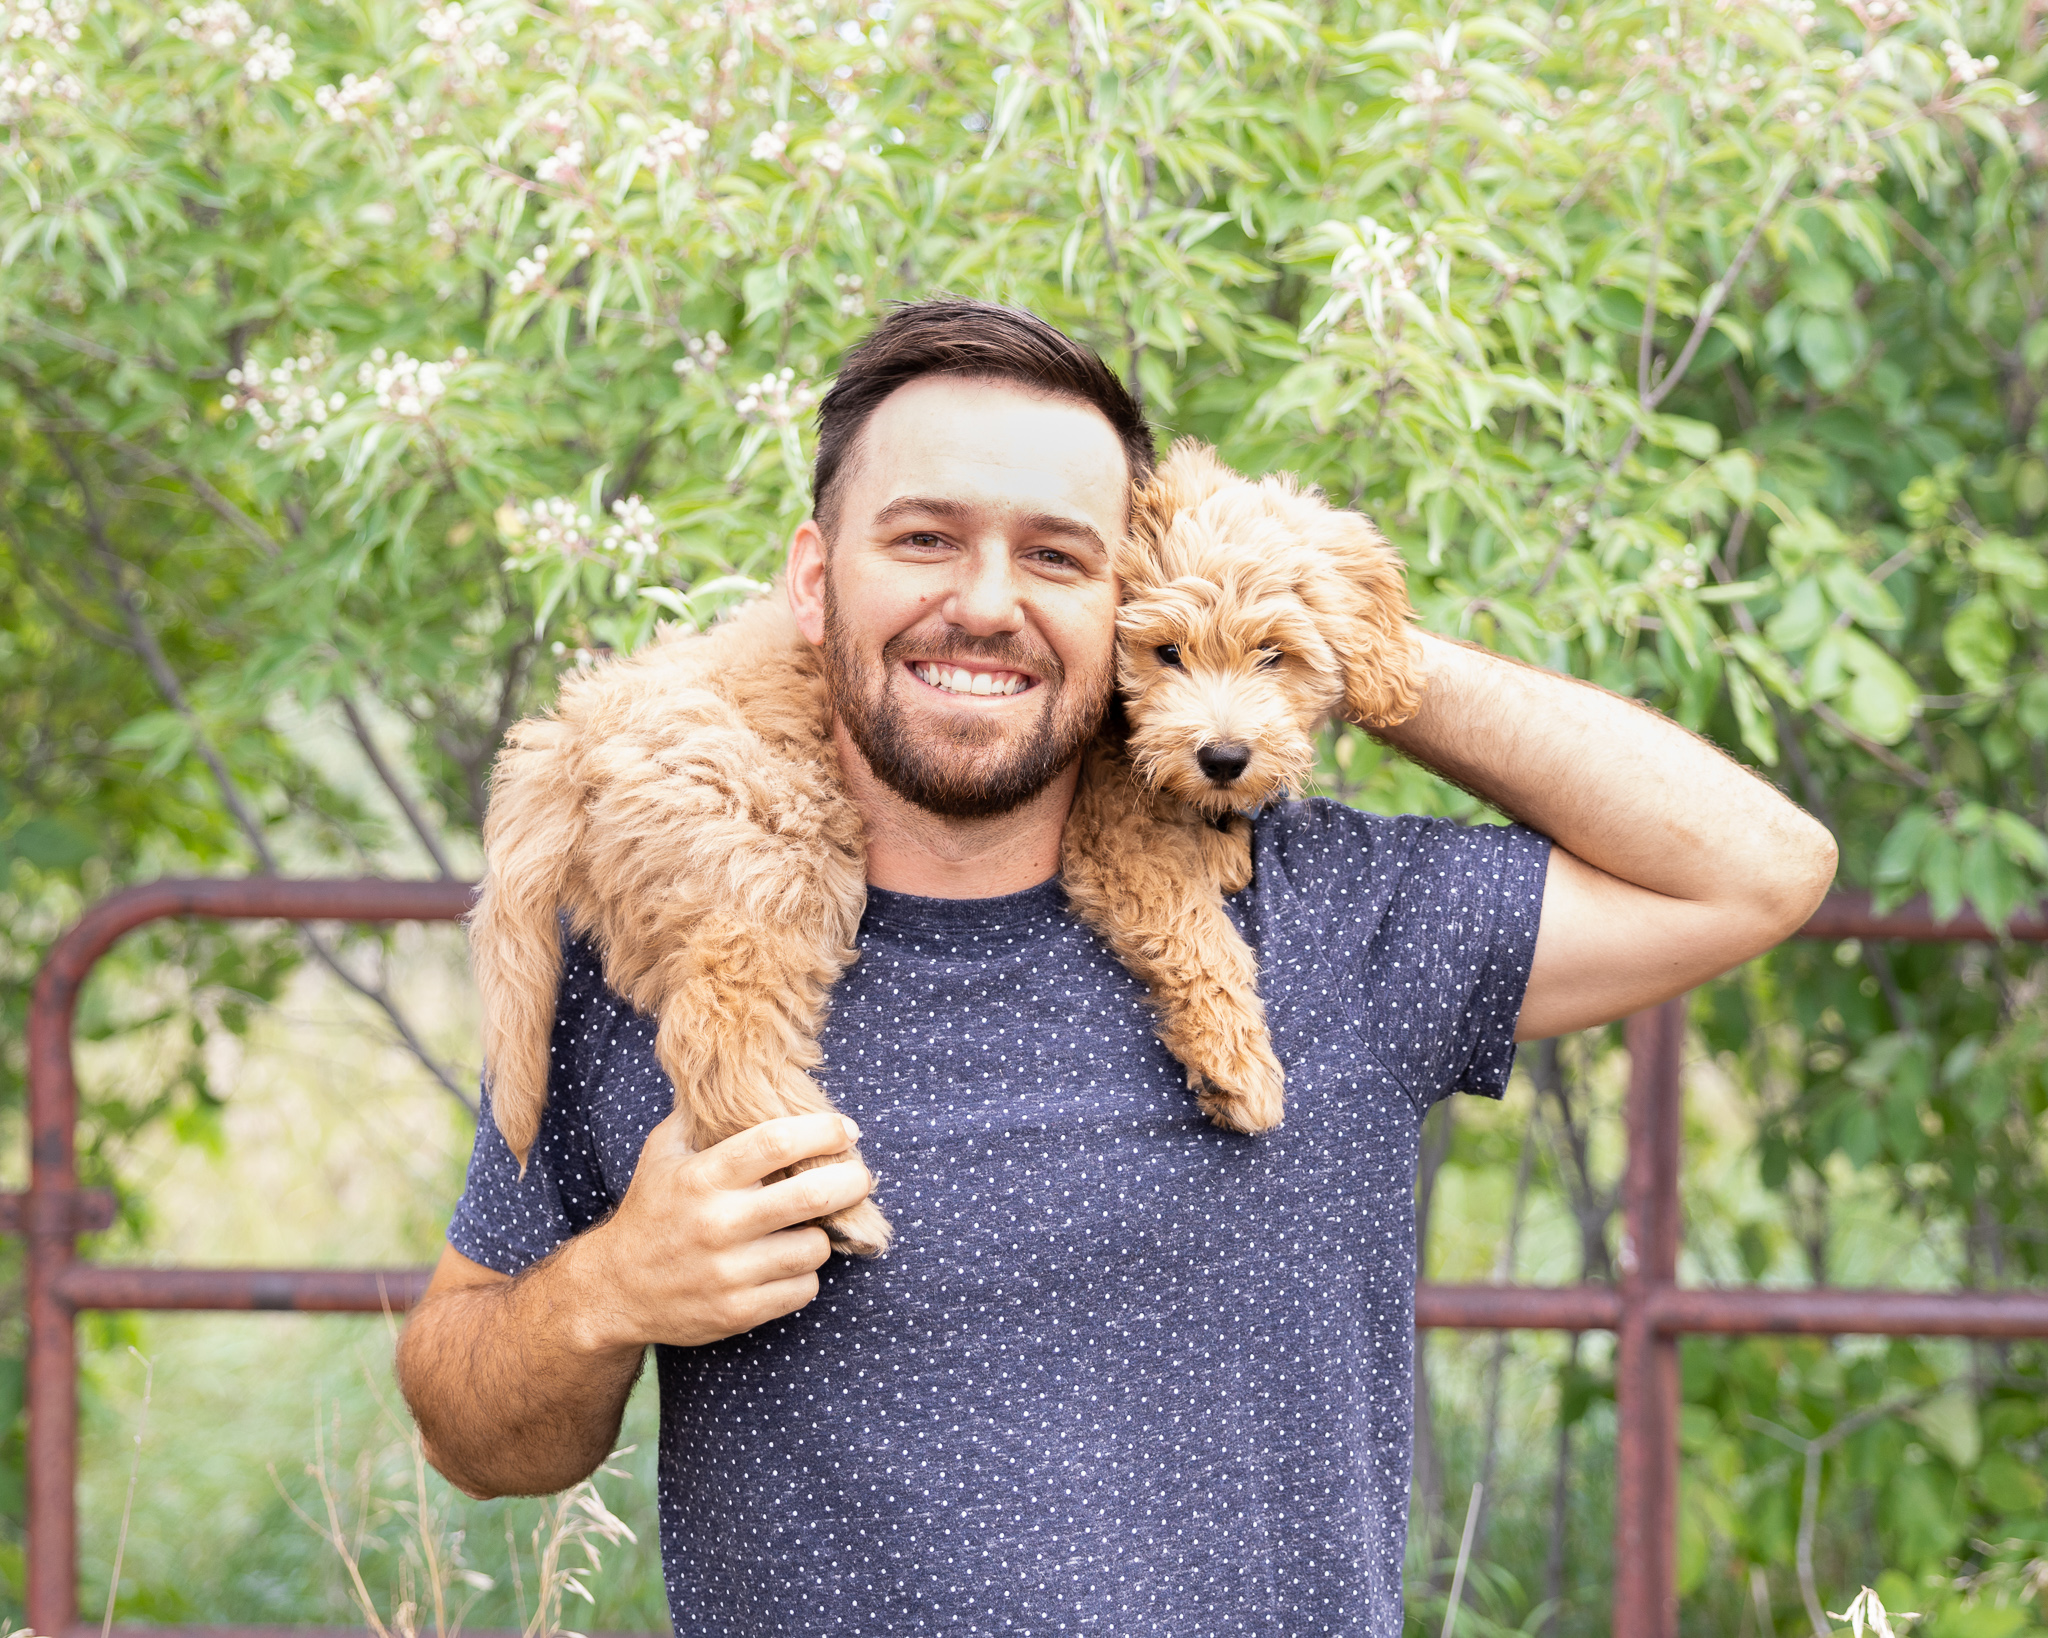 Brandon holding a cute puppy